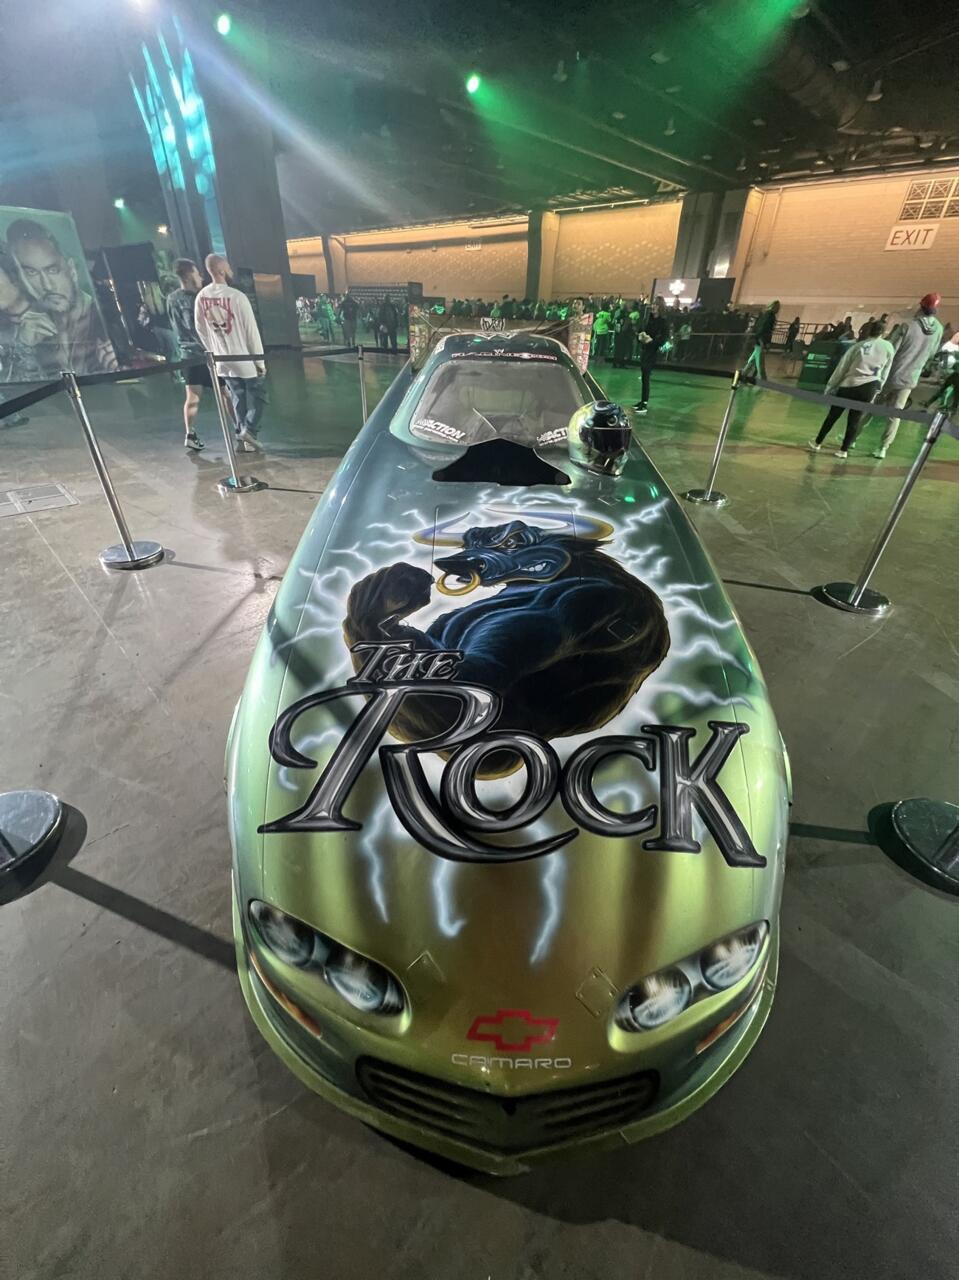 The Rock funny car